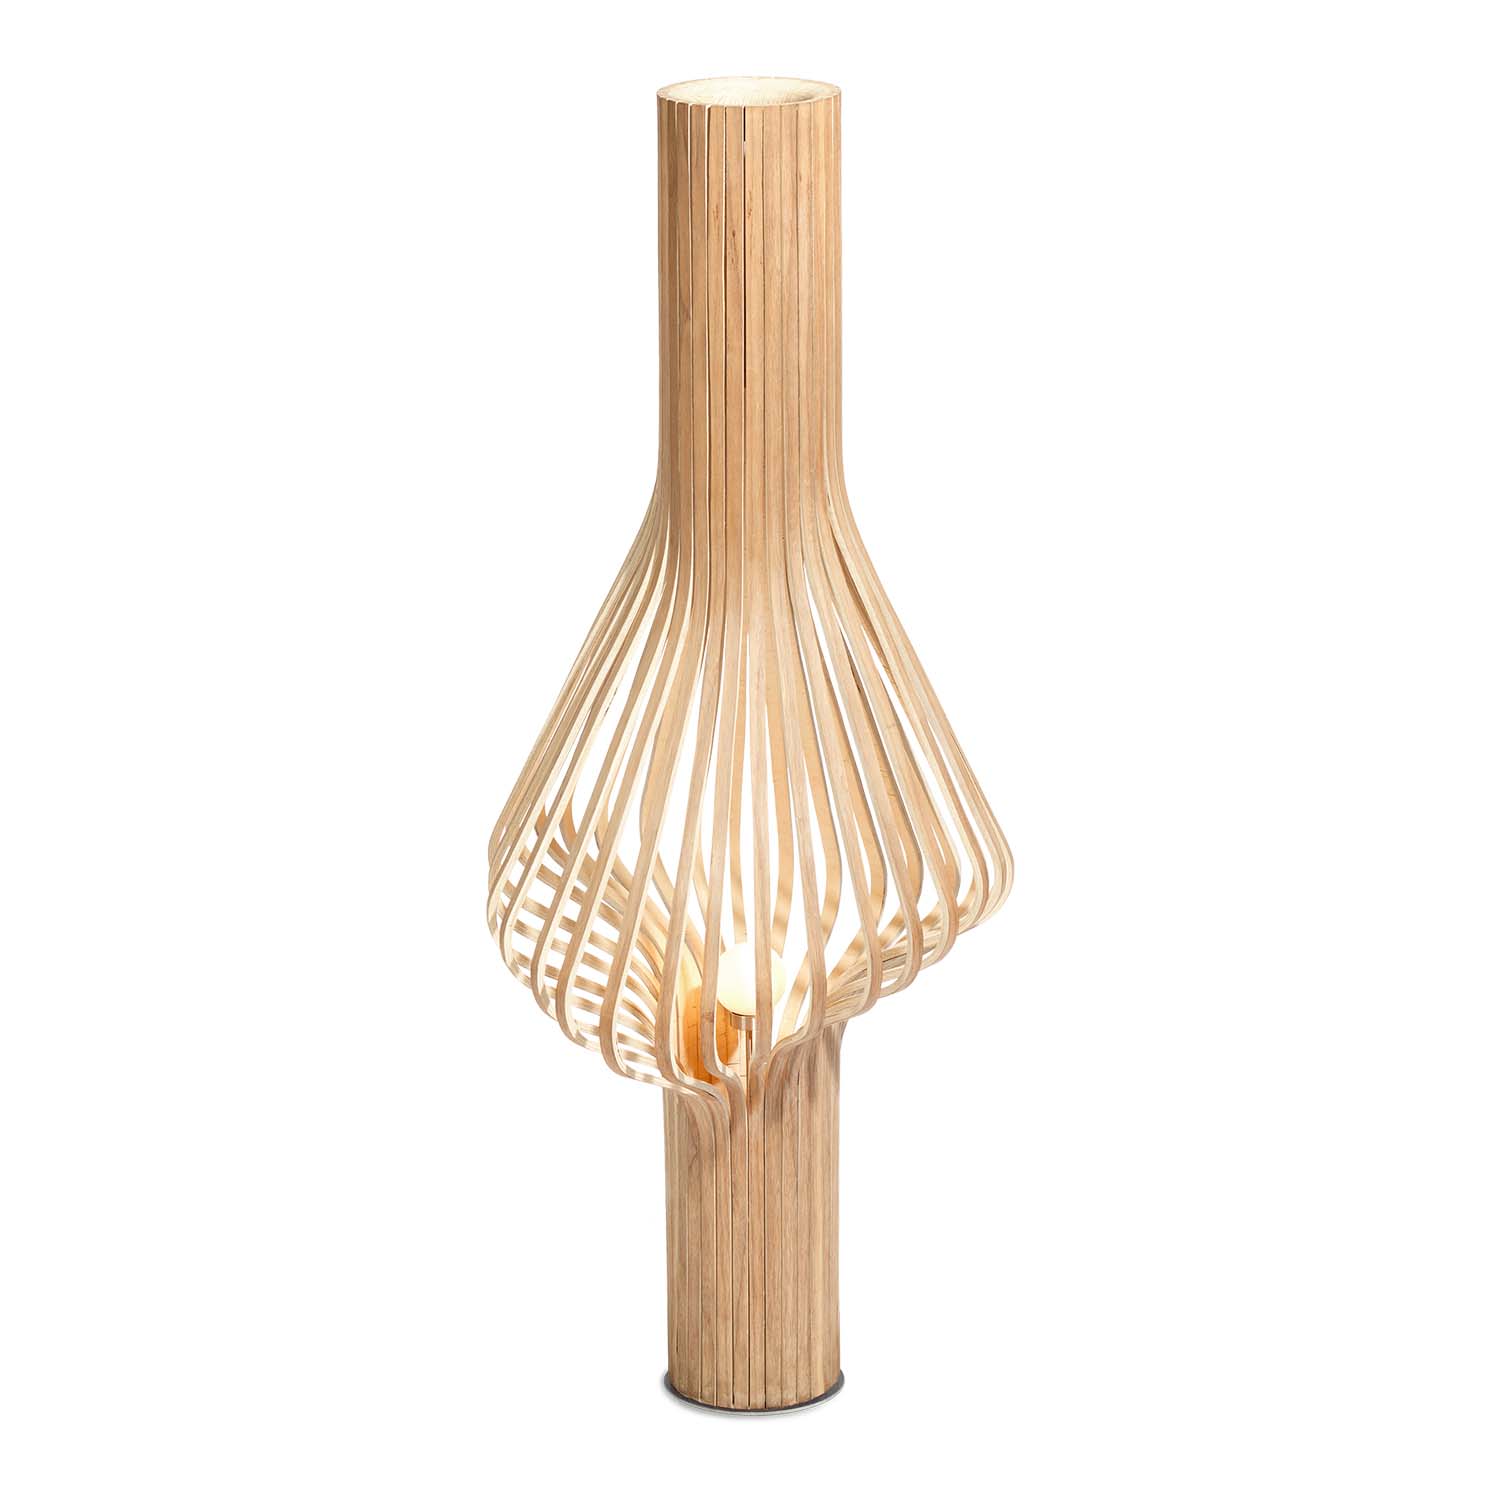 DIVA - Designer and artisanal wooden floor lamp, handcrafted